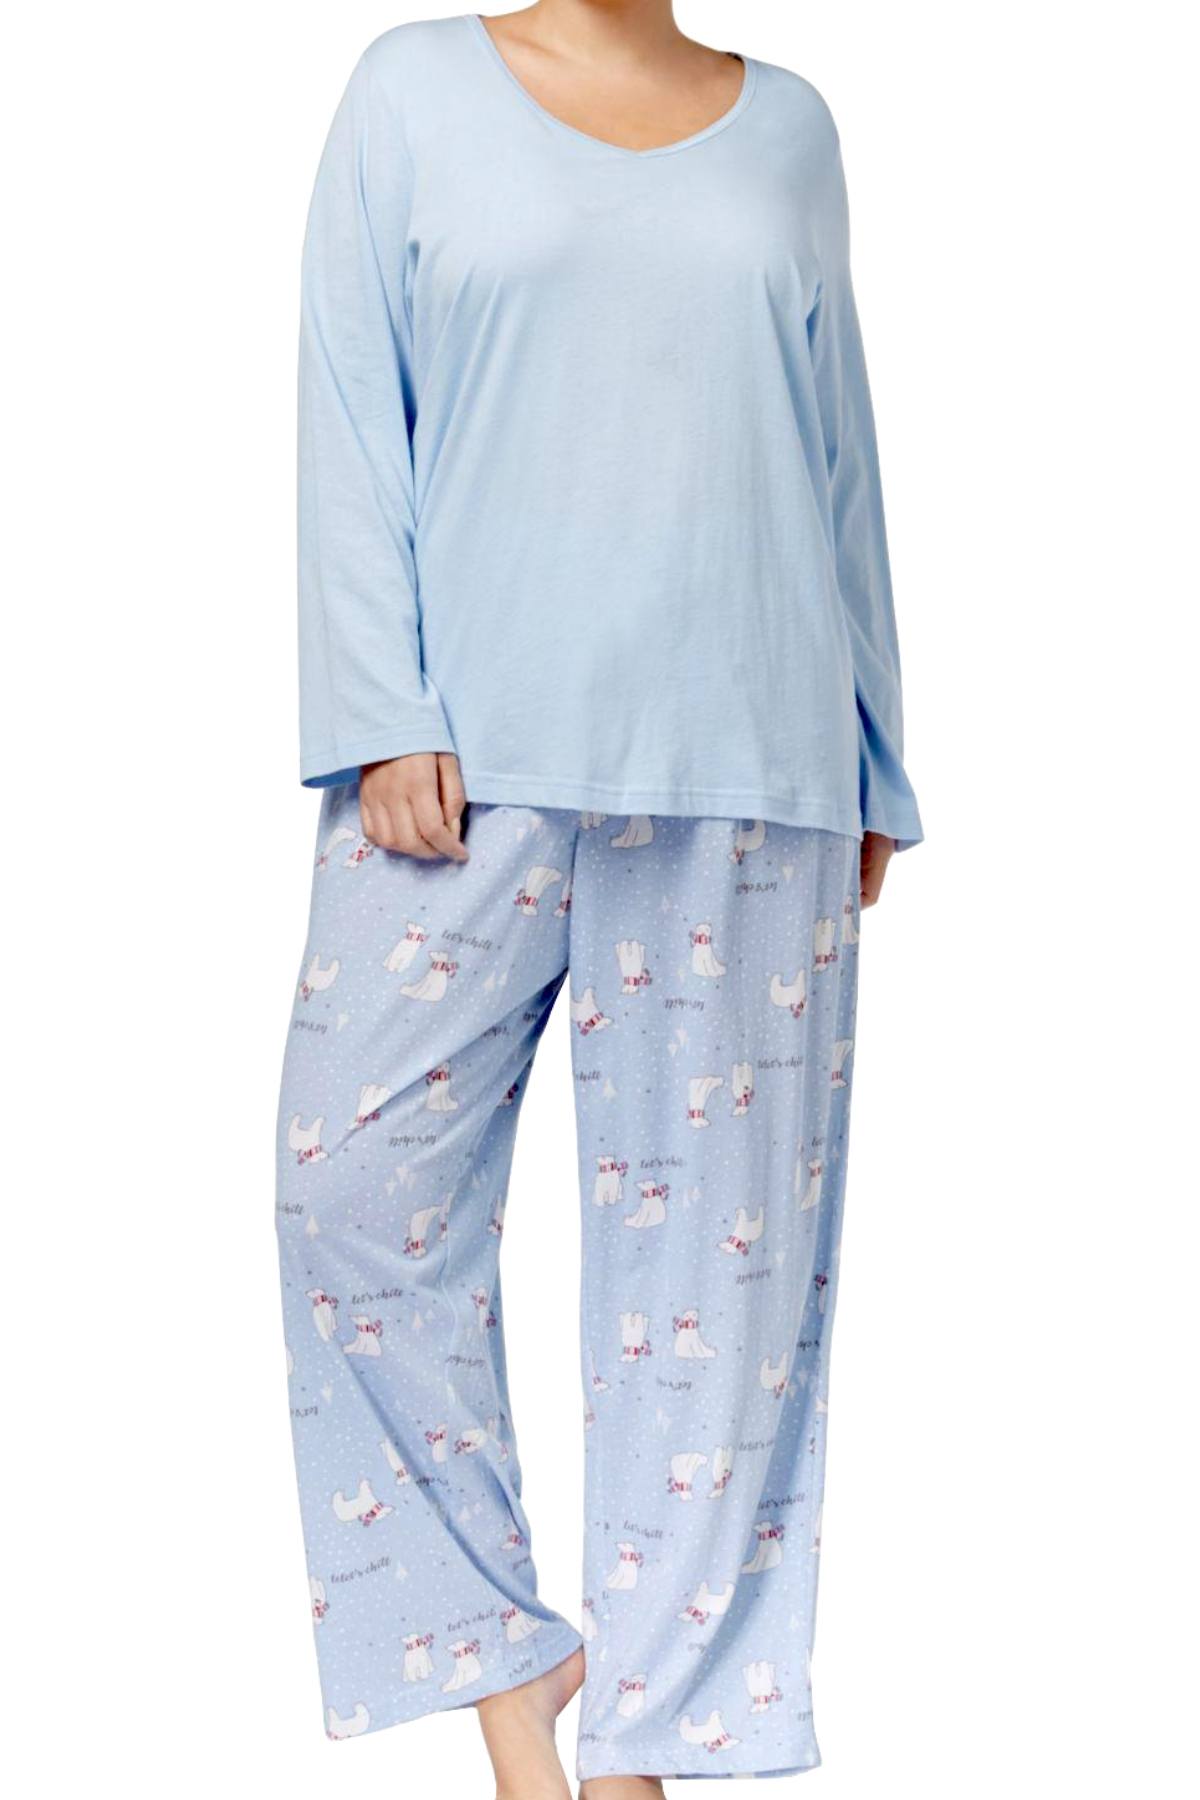 Charter Club Intimates Light-Blue Top & Polar-Bear Printed Pant 2-Pc Pajama Set